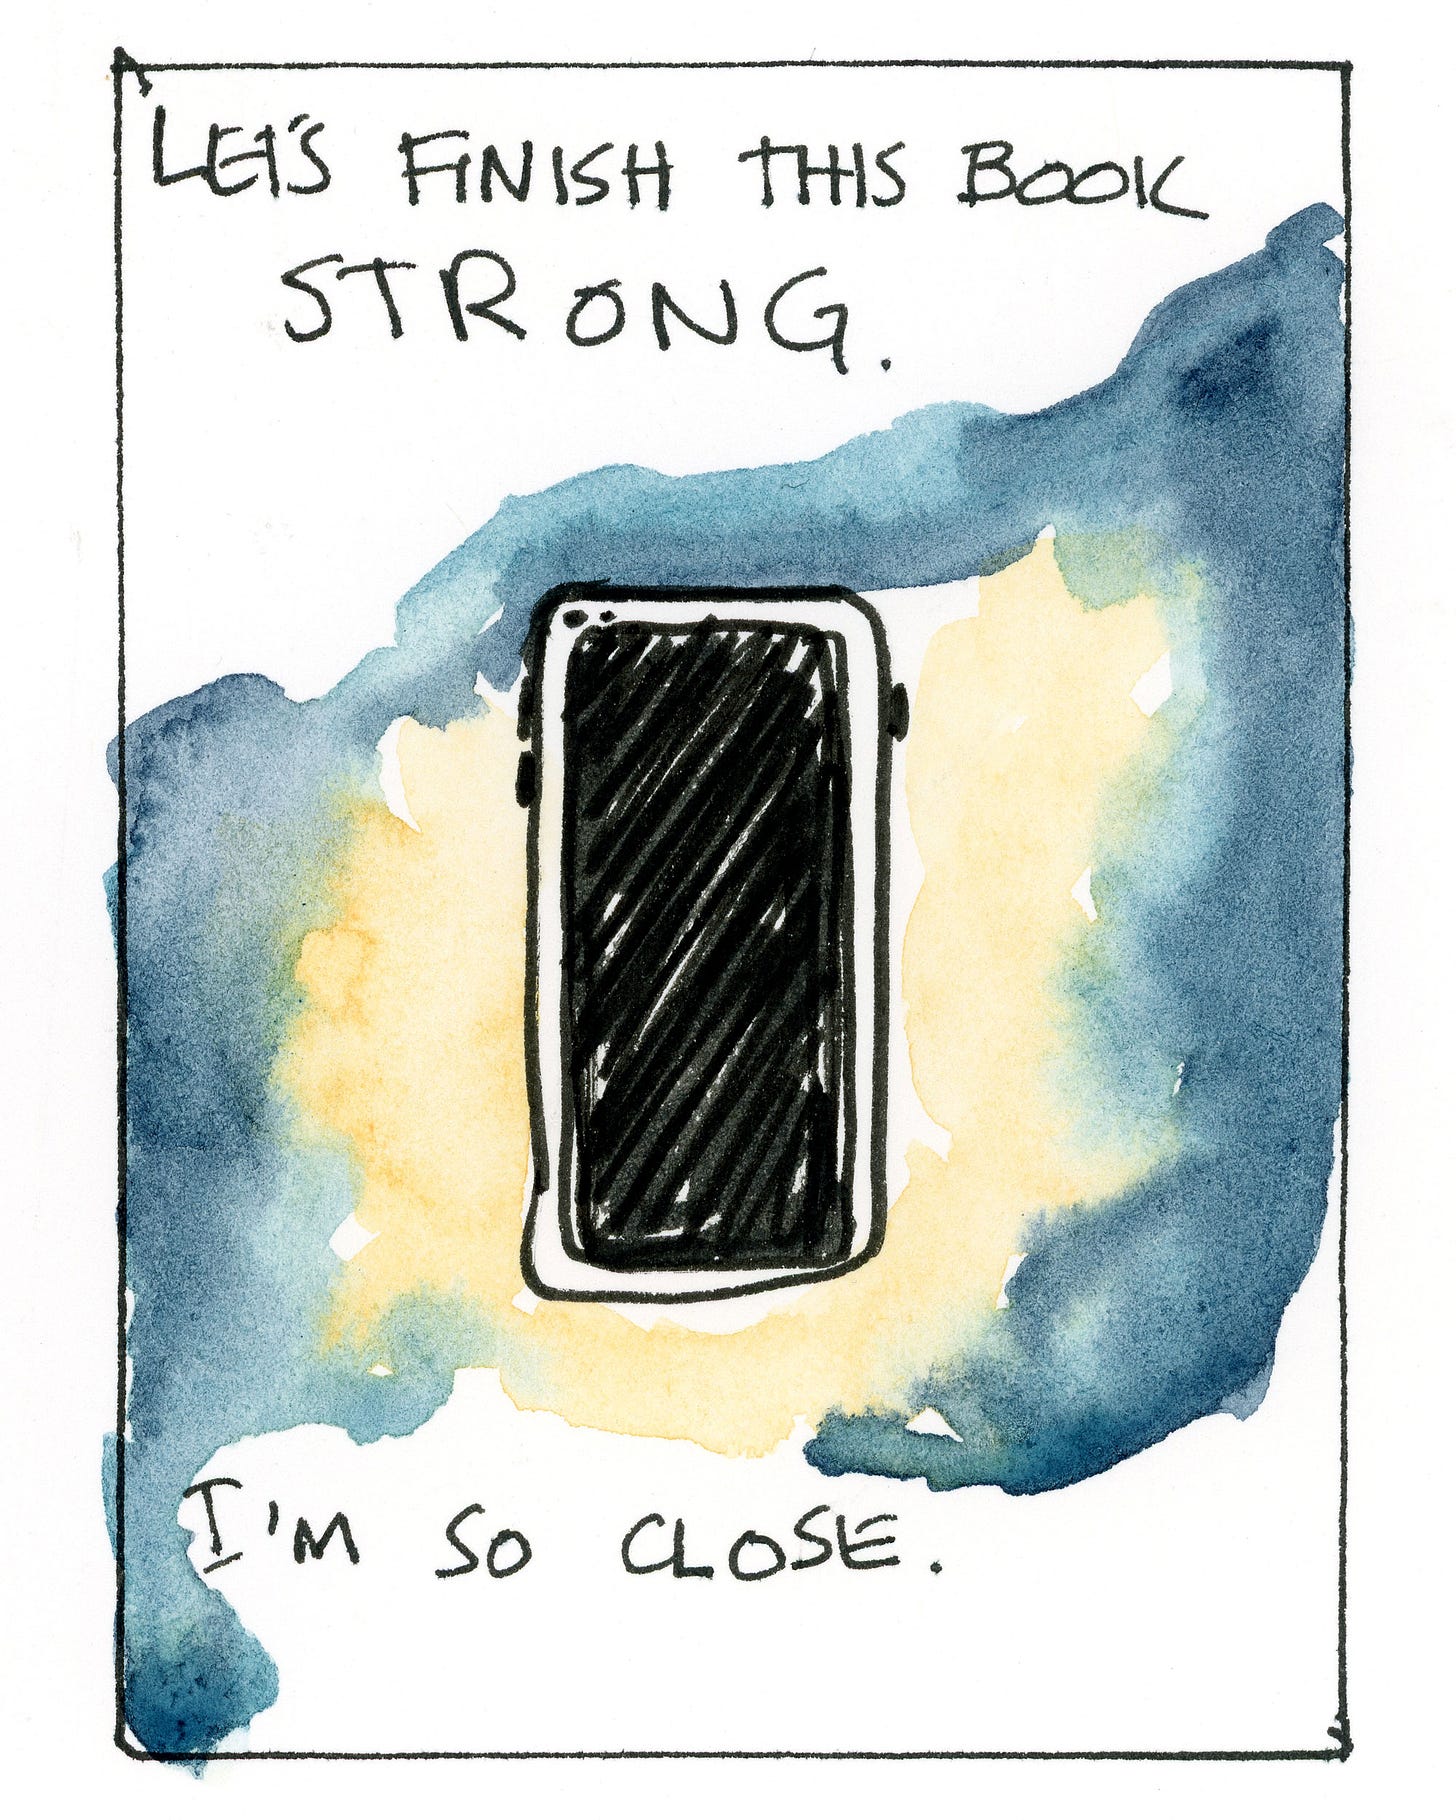 Diary comic on phone addiction by cartoonist K. Woodman-Maynard